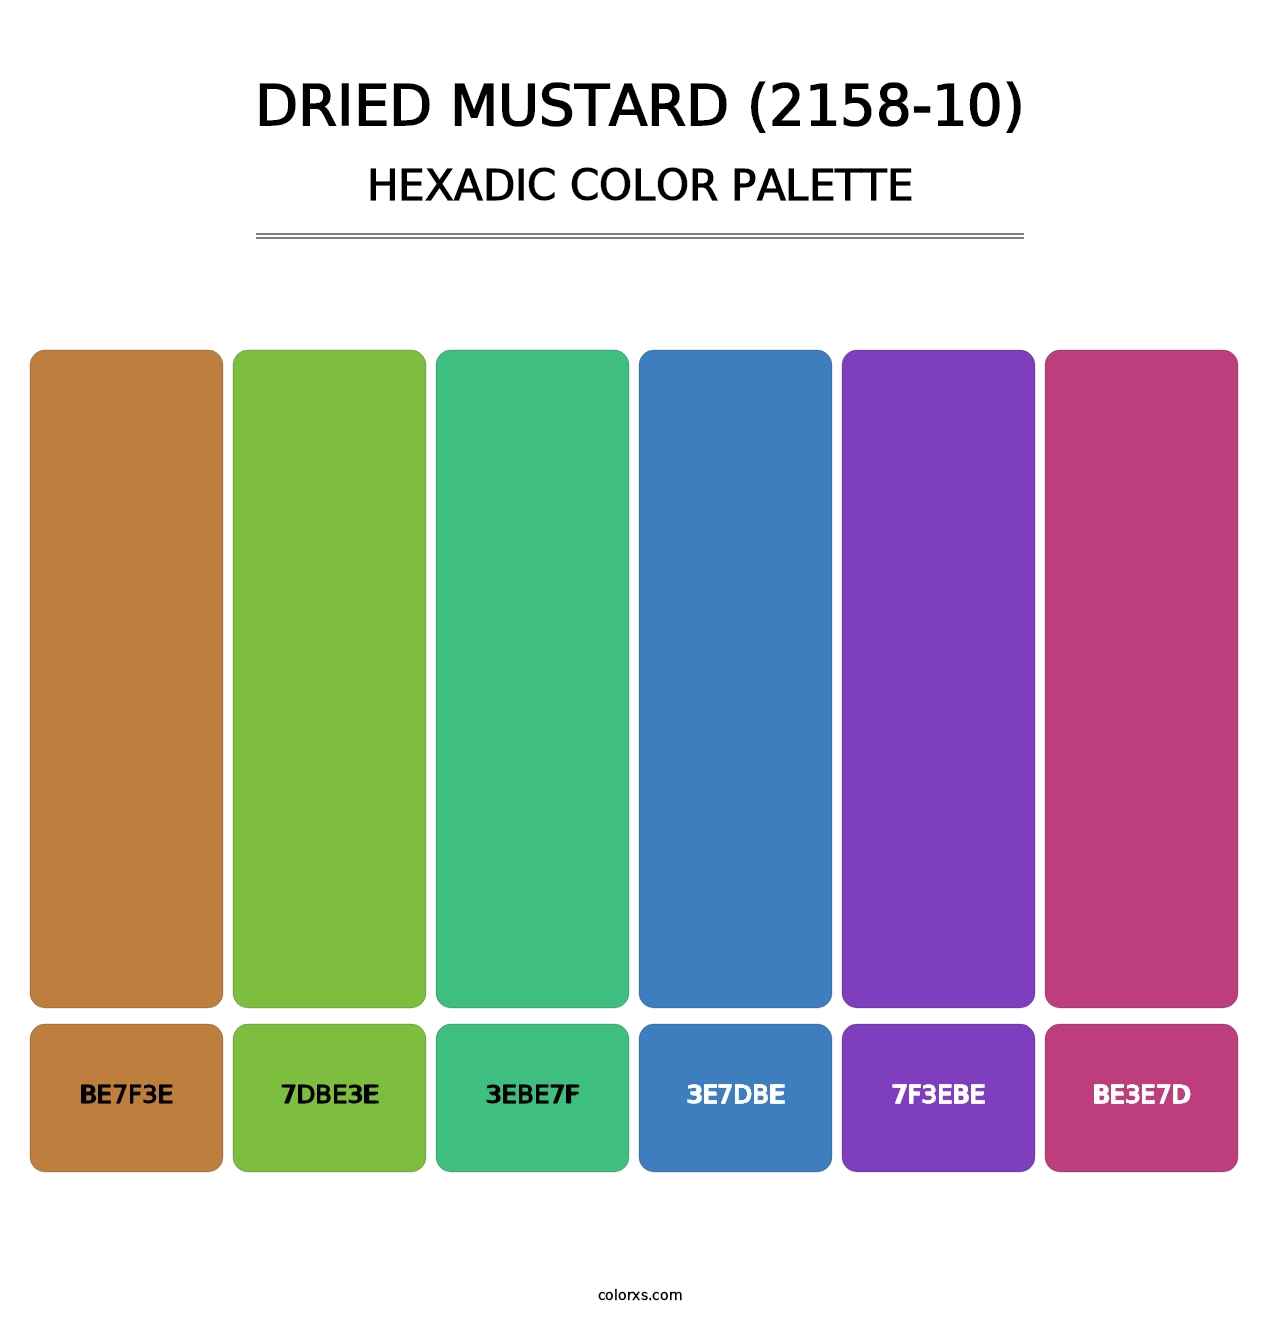 Dried Mustard (2158-10) - Hexadic Color Palette